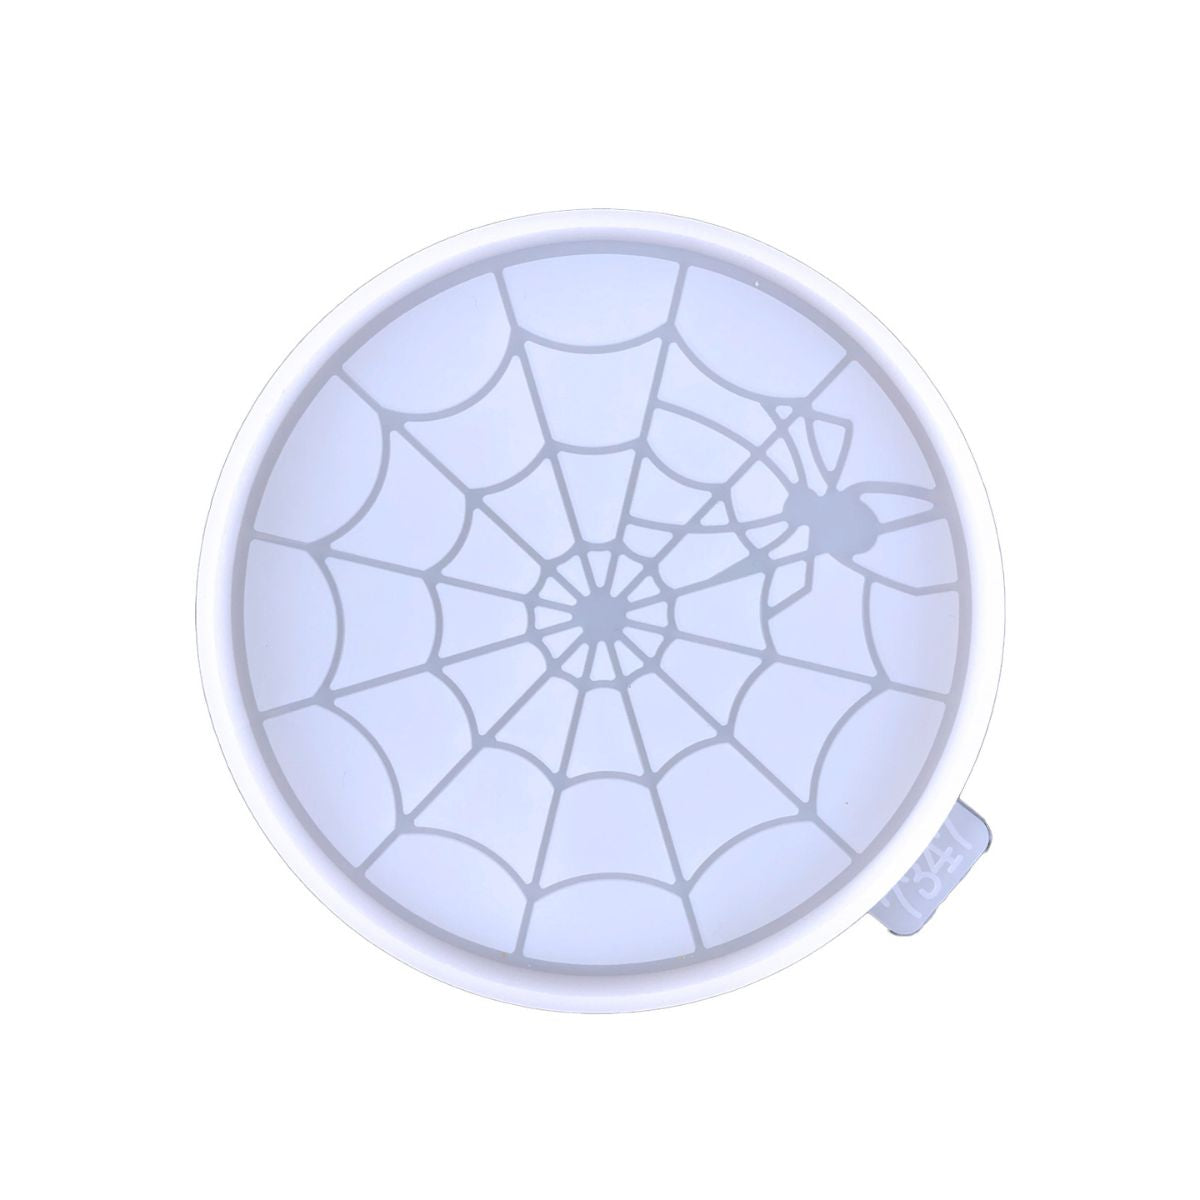 Round Silicone Coaster Mold For Resin Art, Spider Web Design